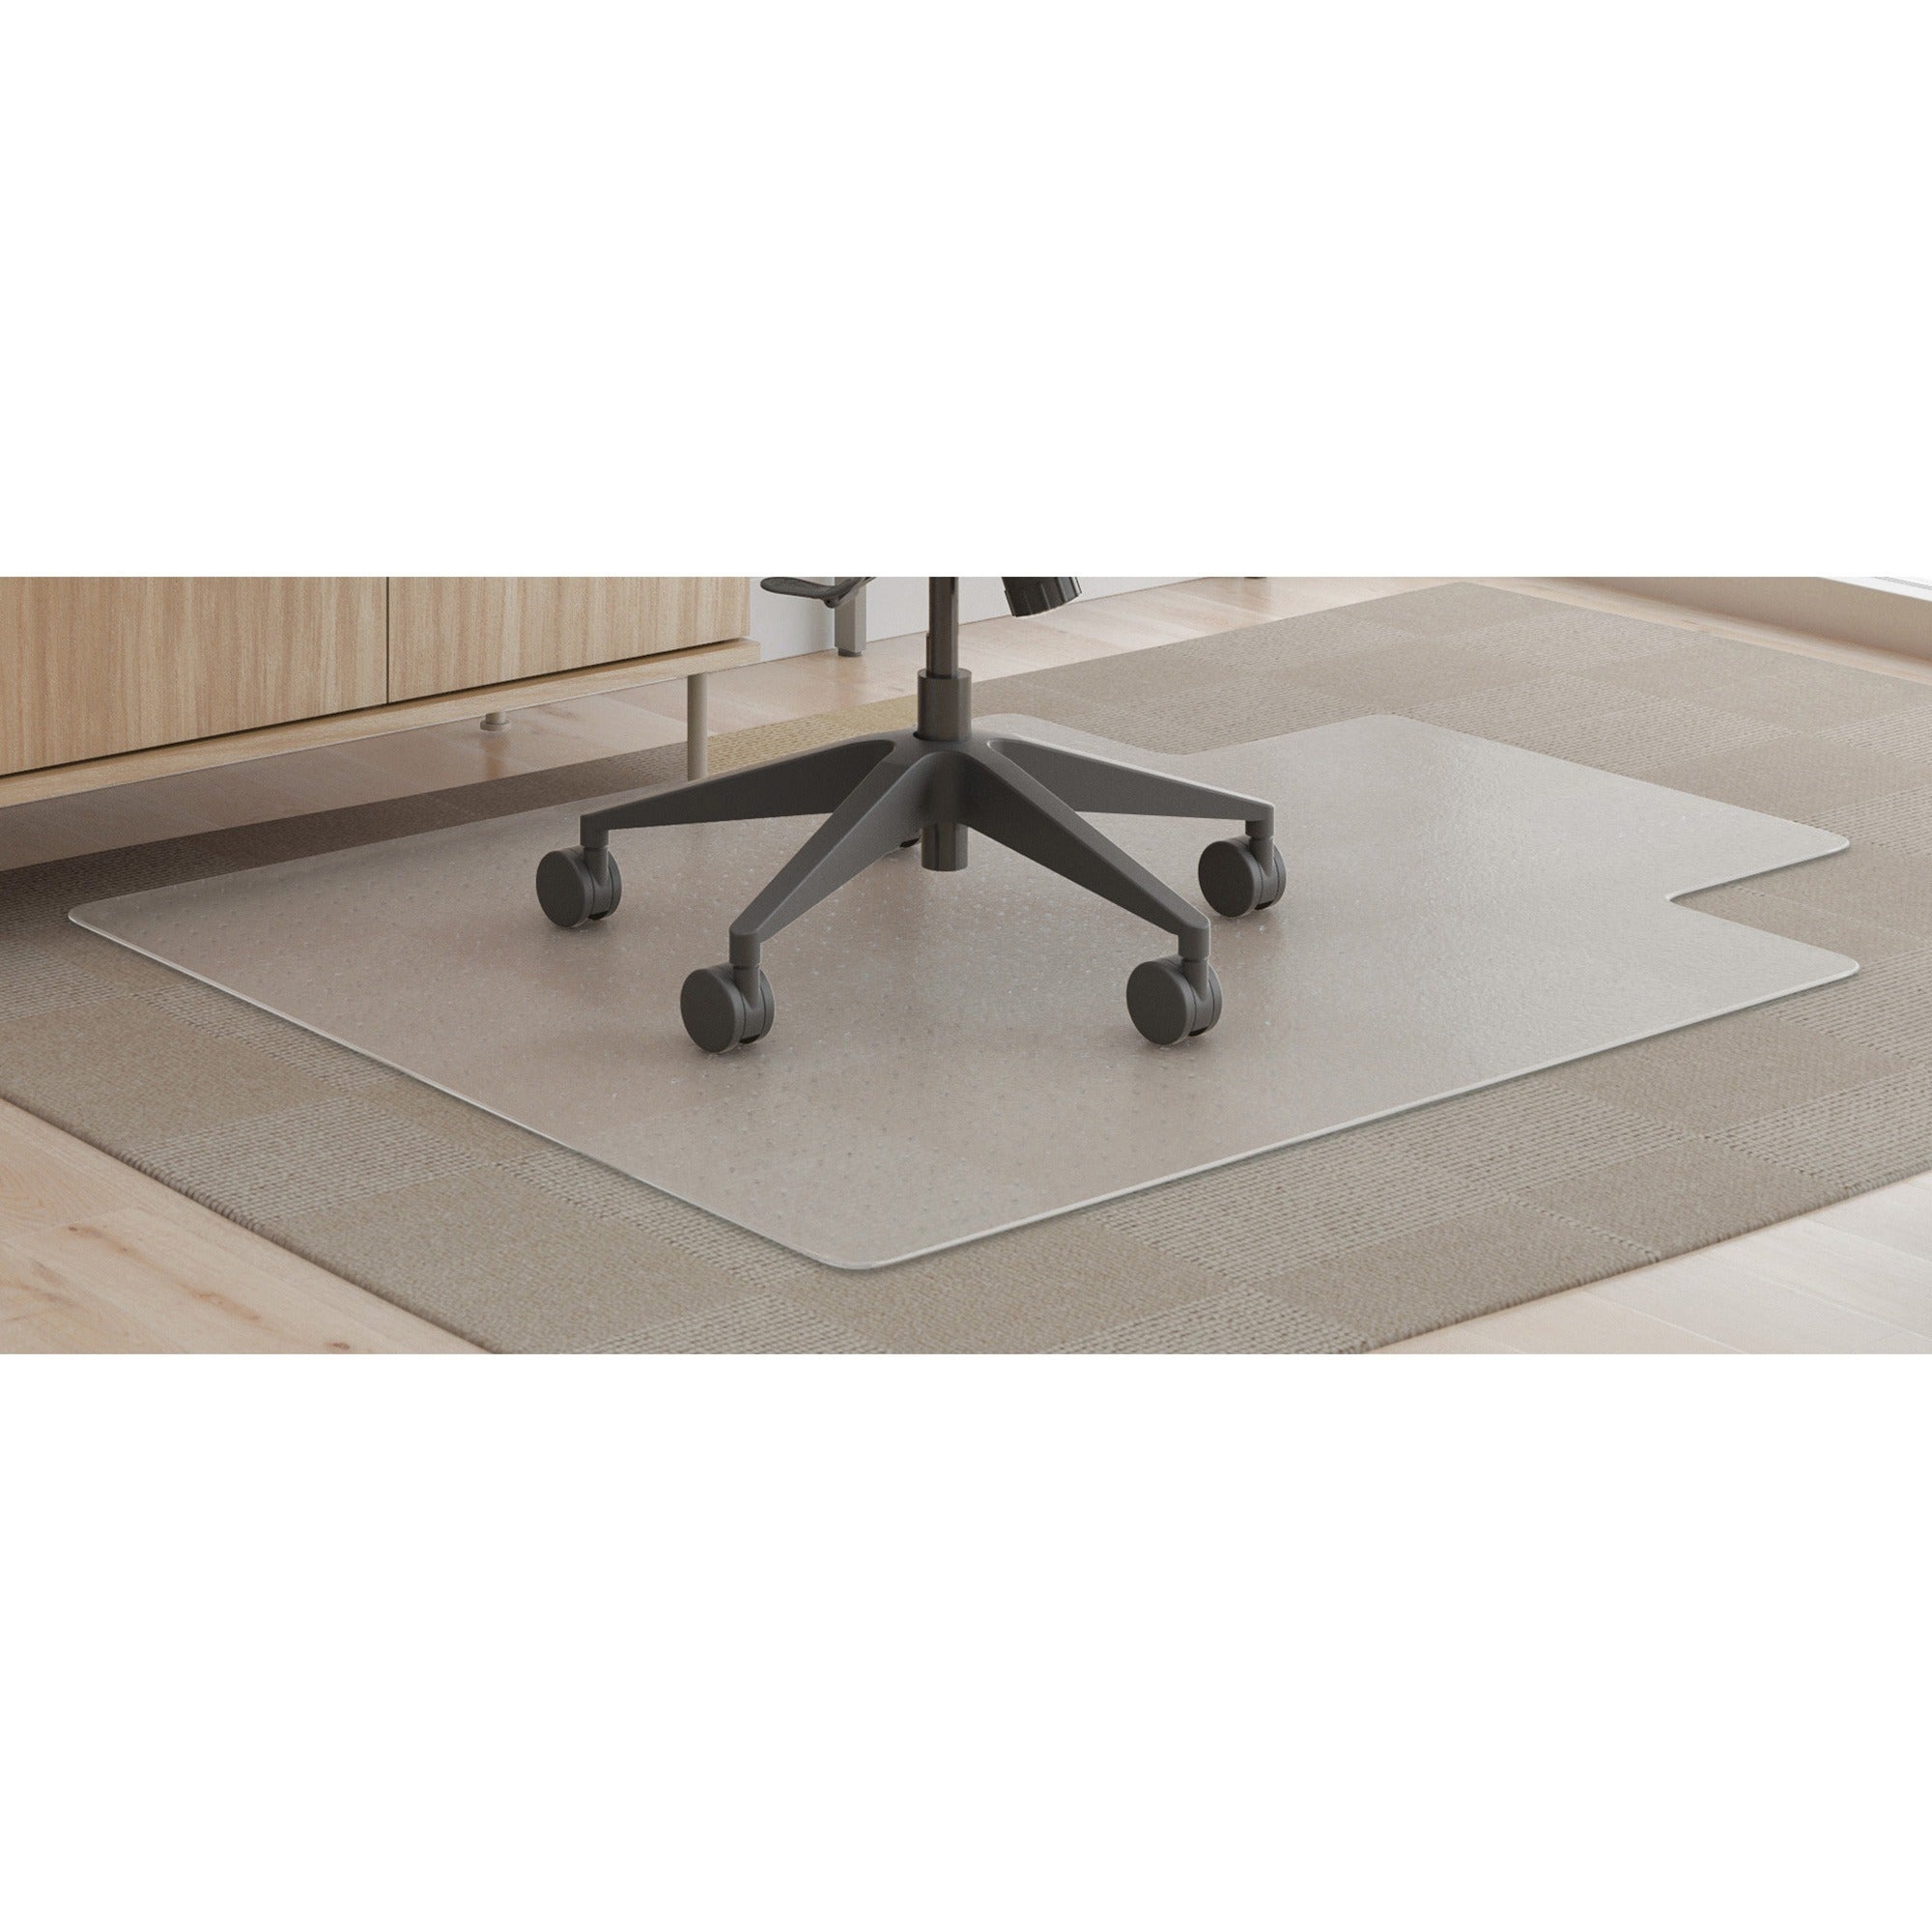 deflecto-supermat+-chairmat-medium-pile-carpet-home-office-commercial-48-length-x-36-width-x-0500-thickness-rectangular-polyvinyl-chloride-pvc-clear-1-carton_defcm14112amcom - 1